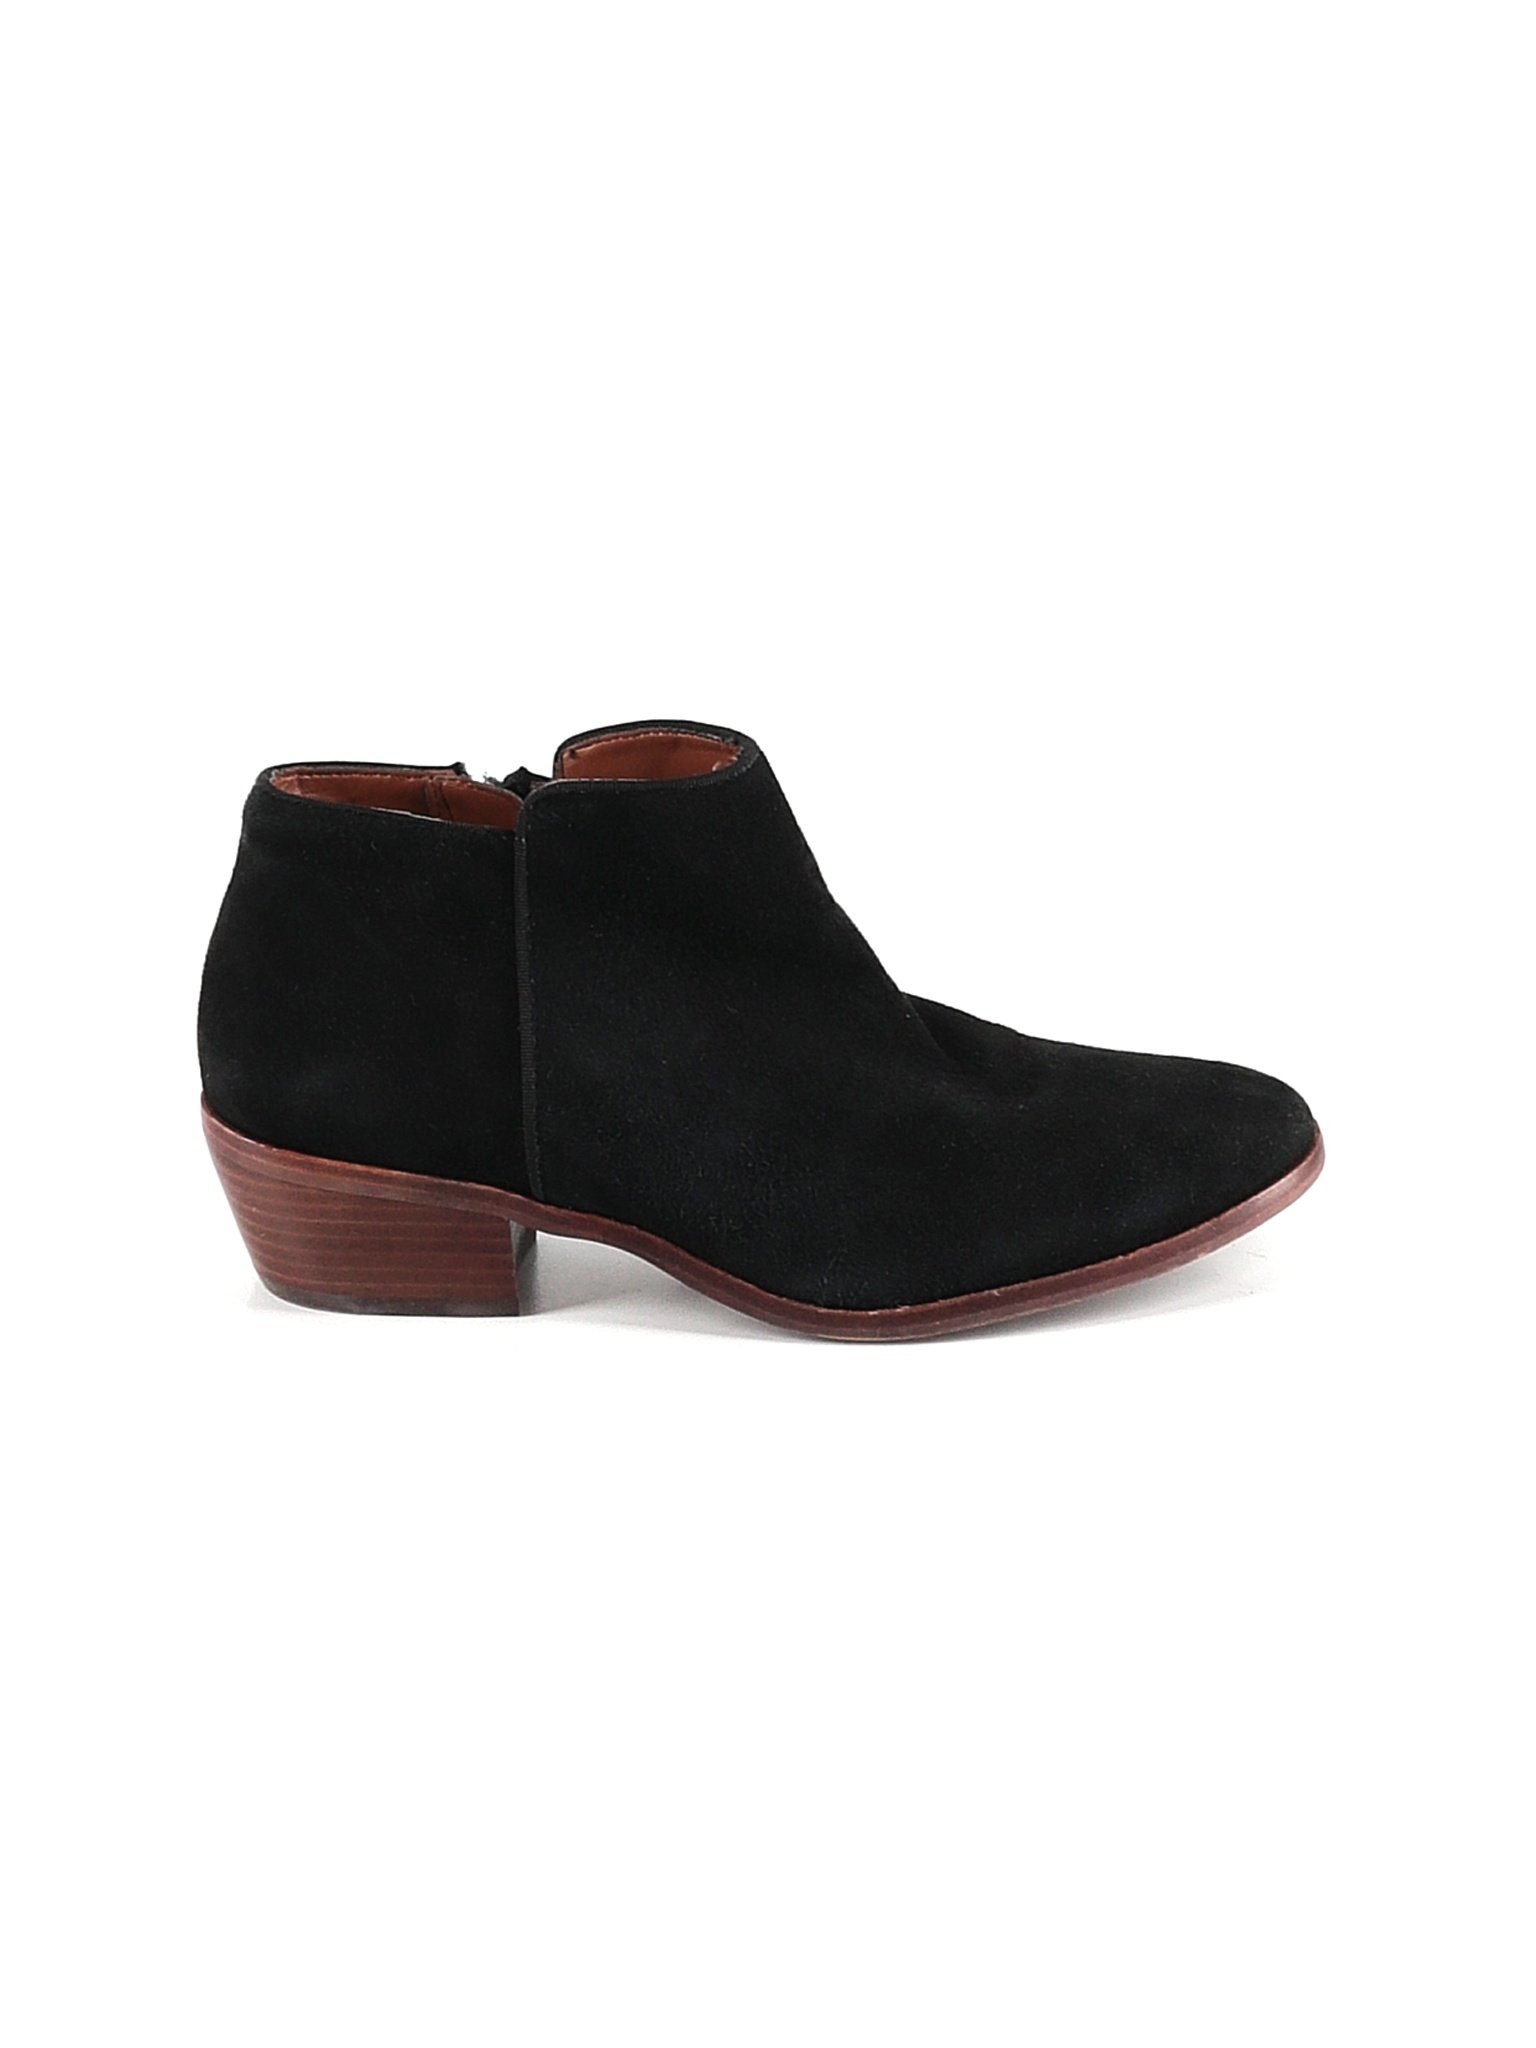 Sam Edelman Women Black Ankle Boots US 9.5 | eBay